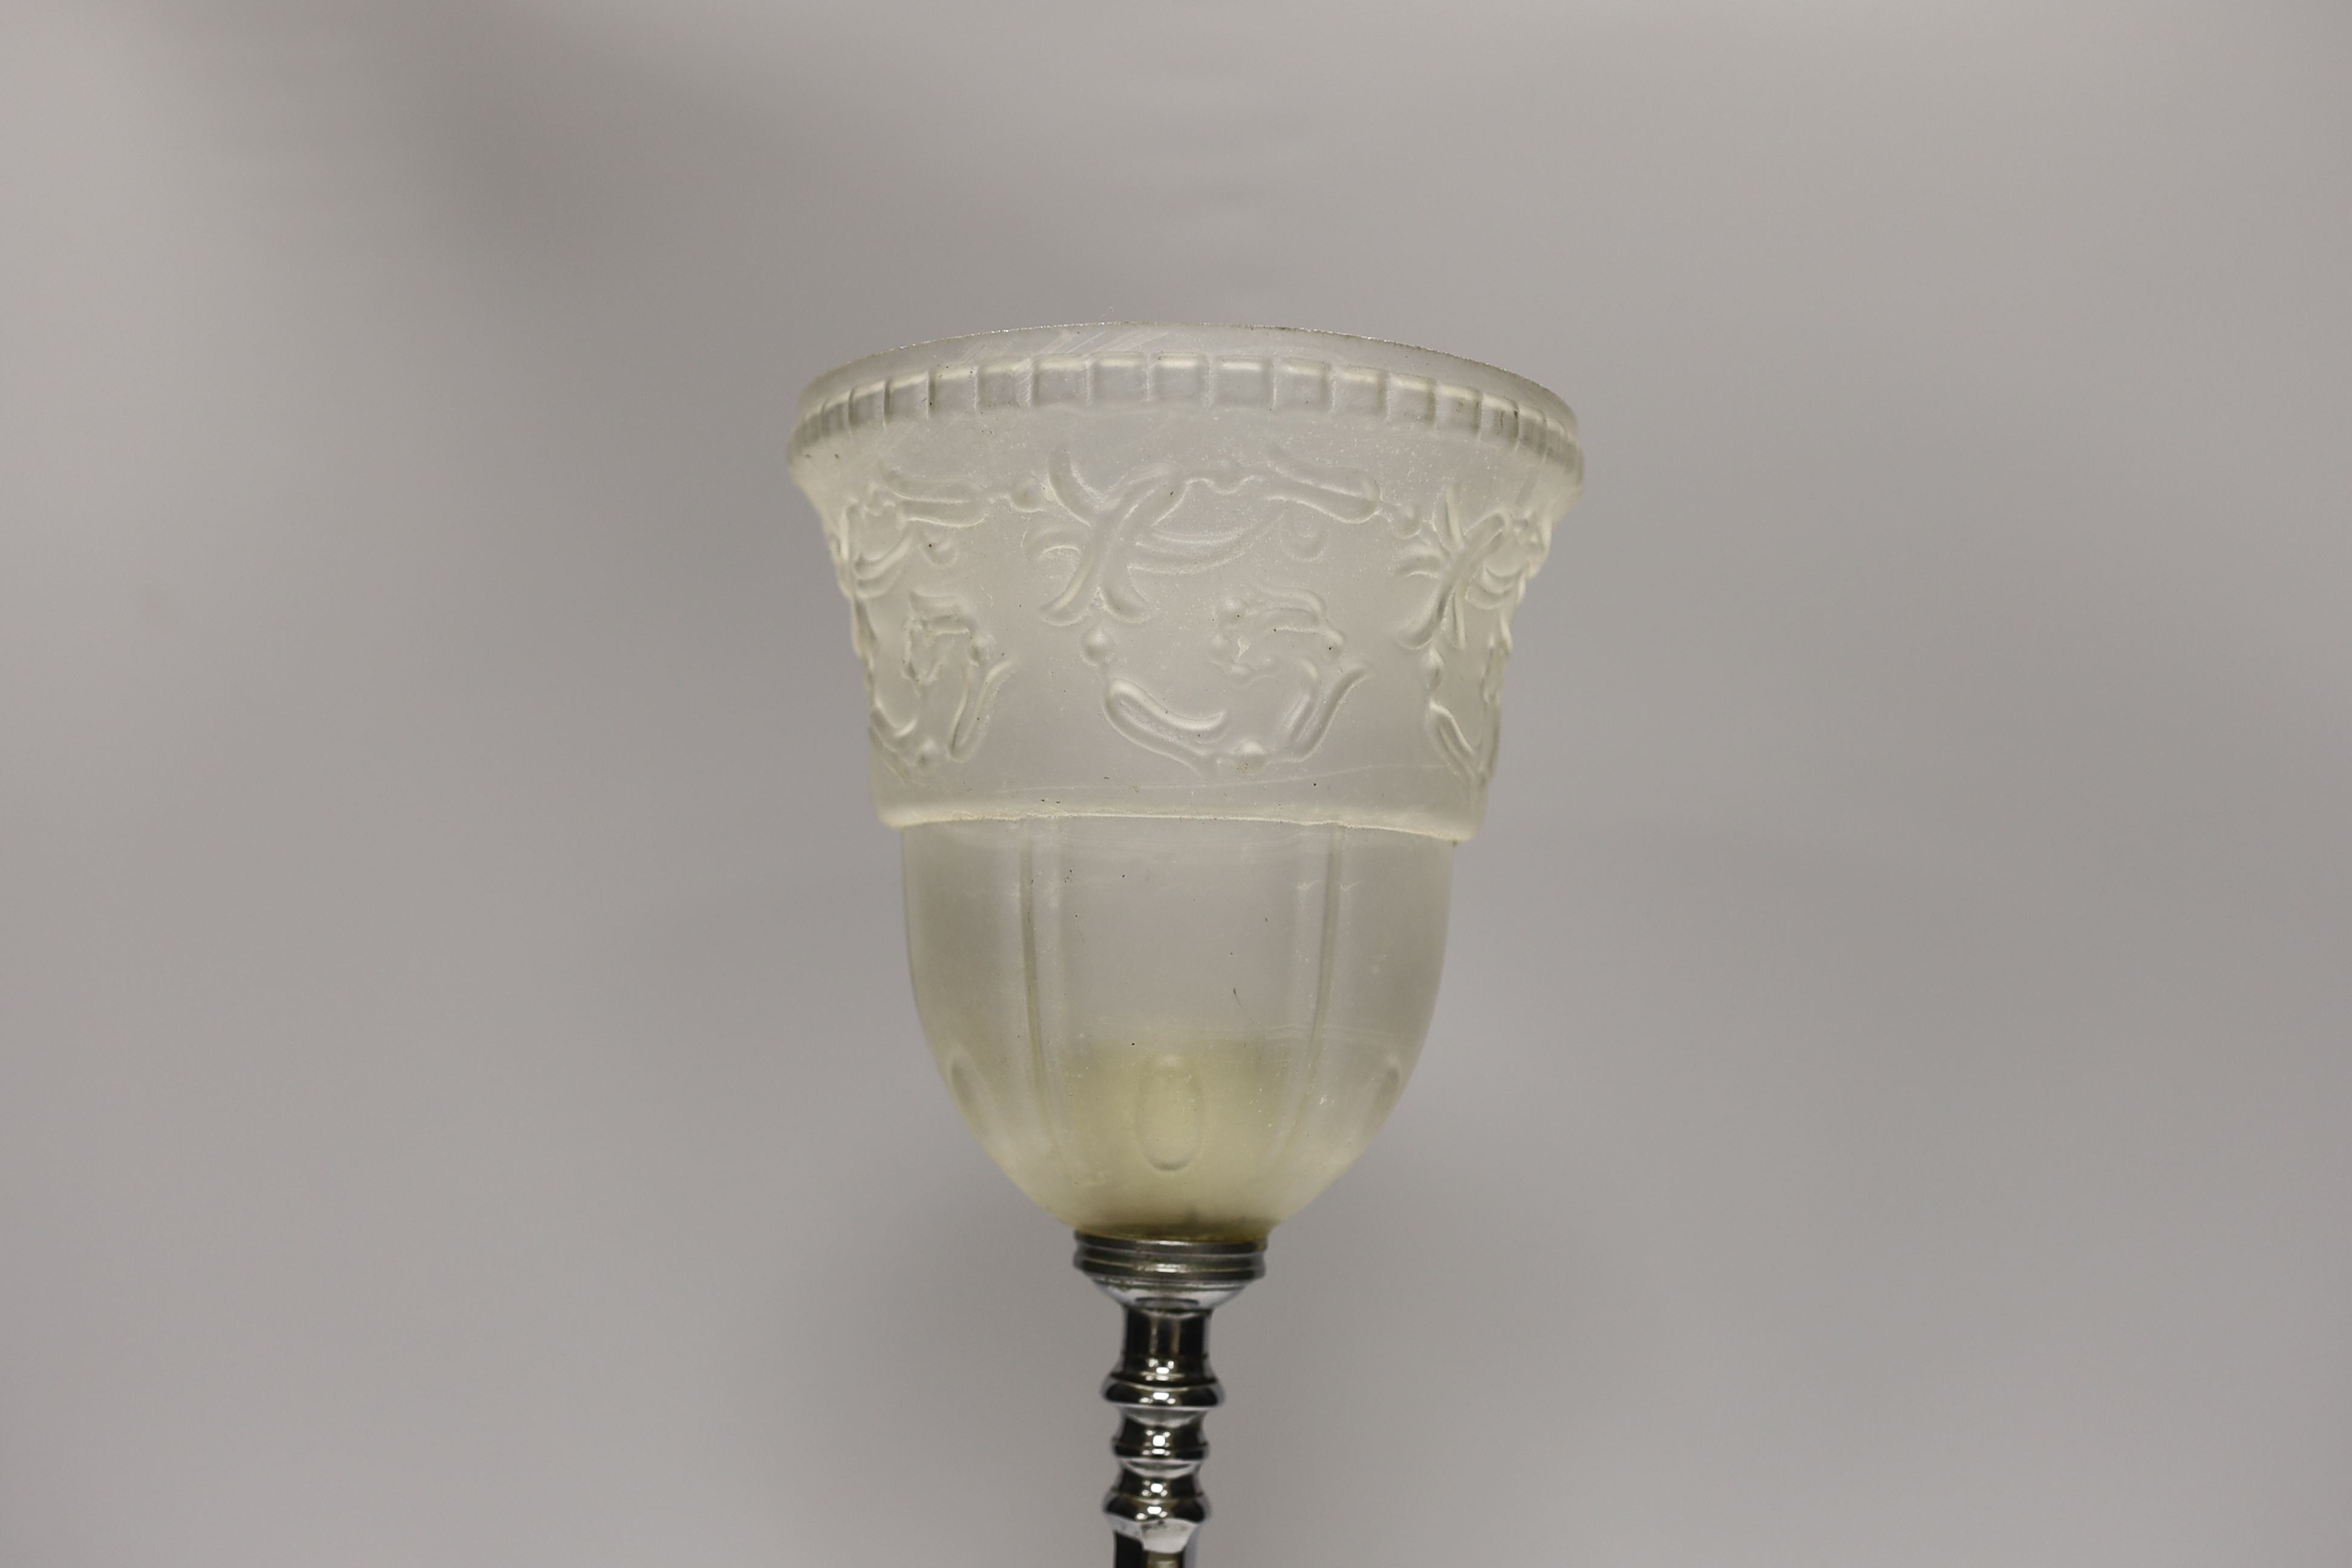 A chrome Pullman table lamp and shade, 42.5cm high